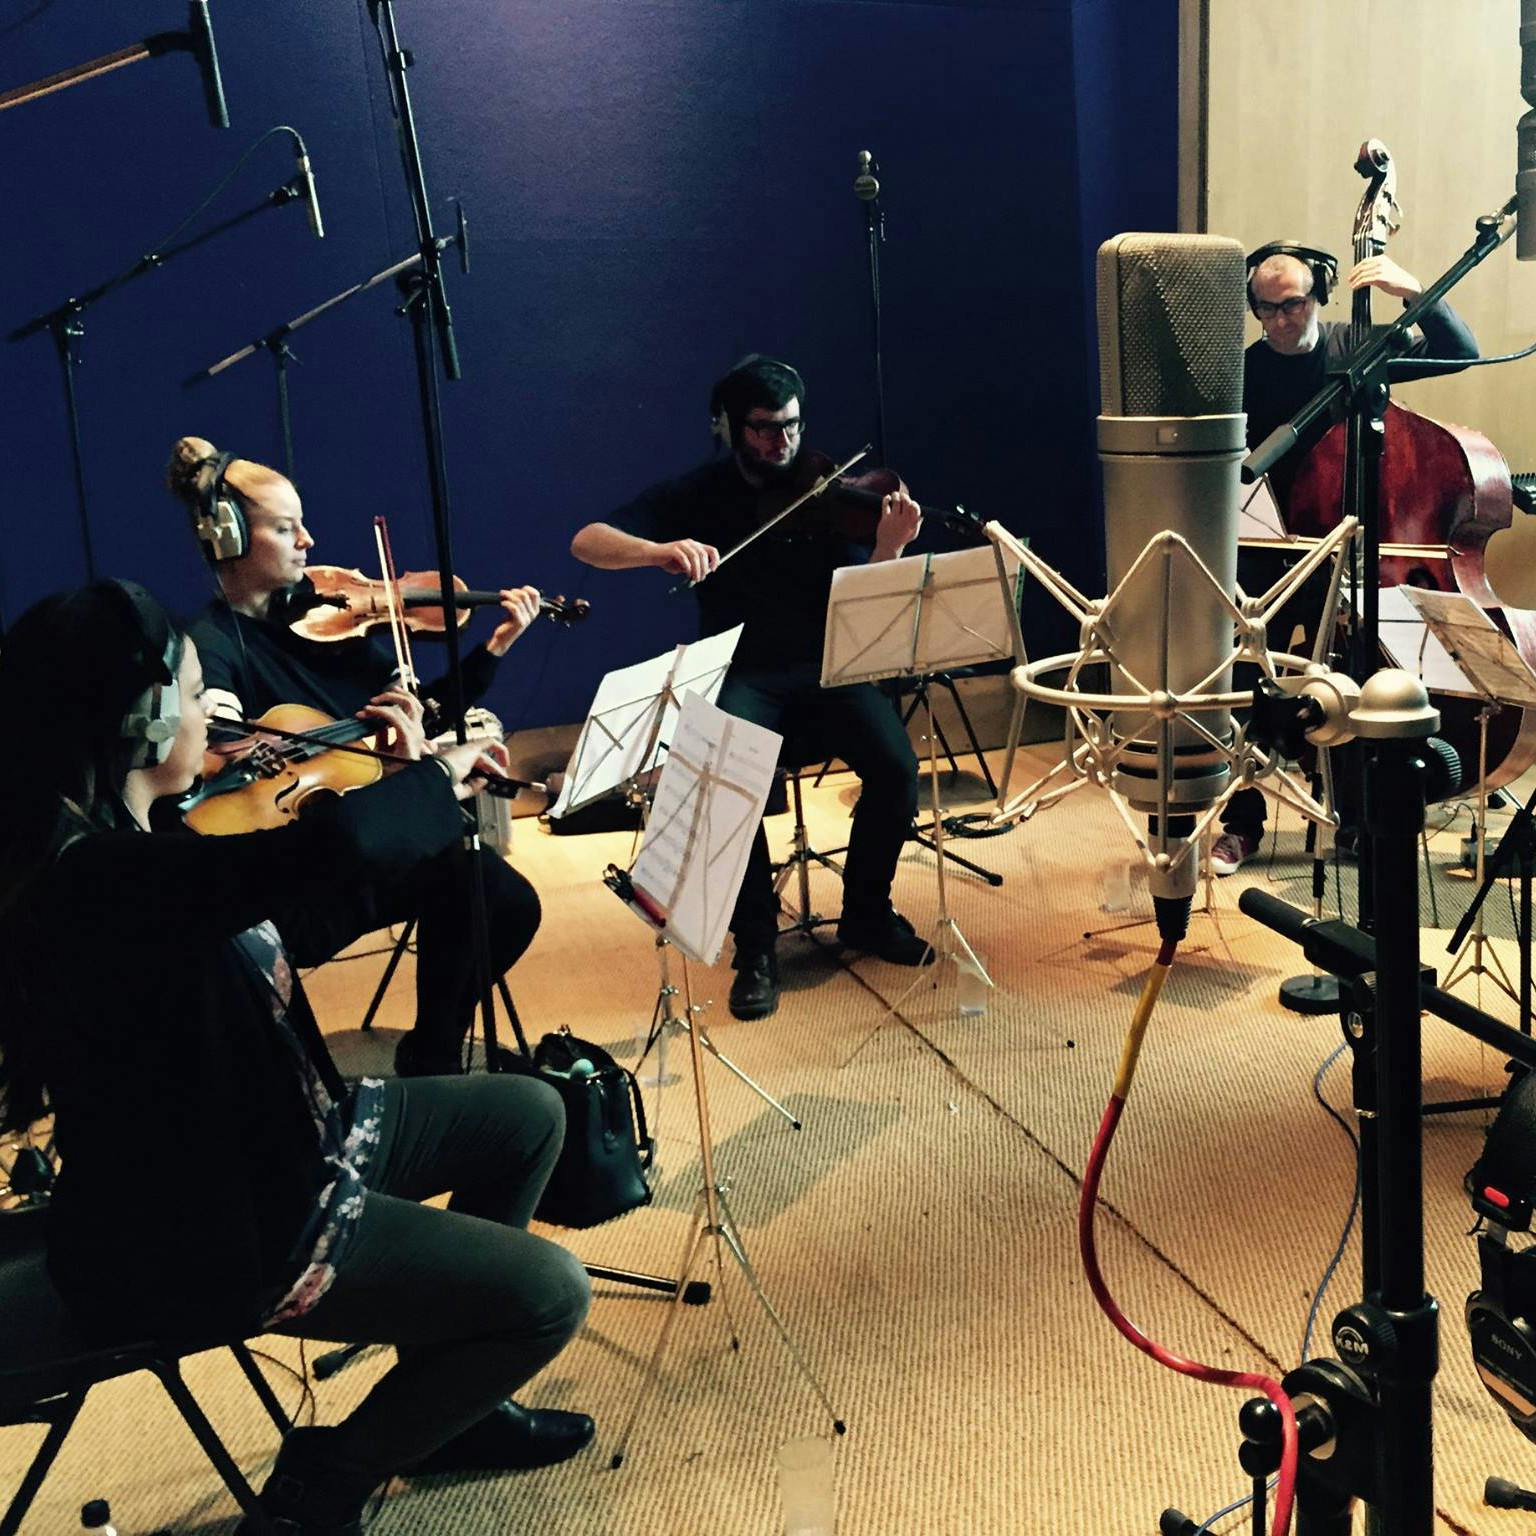 Quartet Volute in the studio with friends